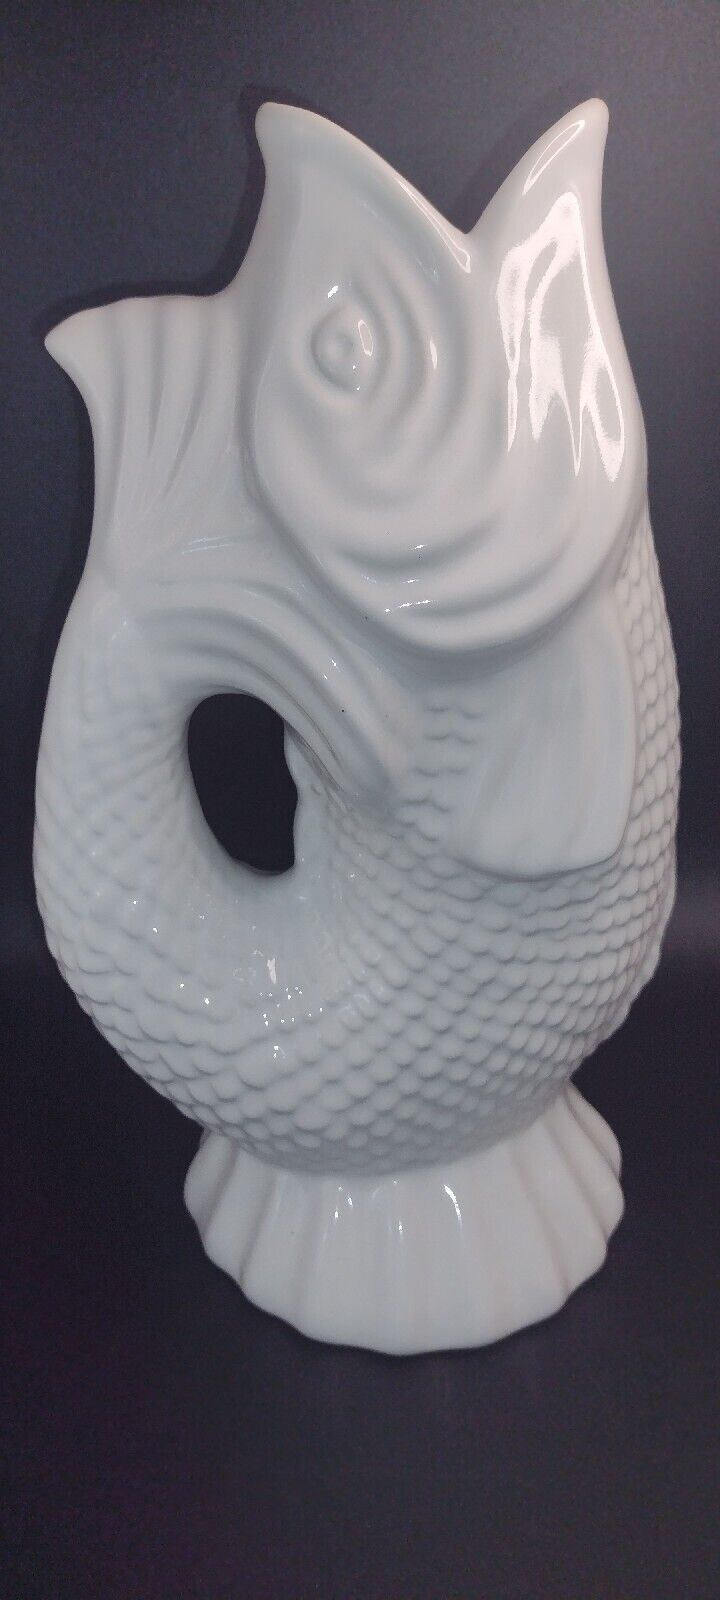 Portugal Pottery Jug Fish Pitcher Vase Ceramic White VTG Does Not Gurgle